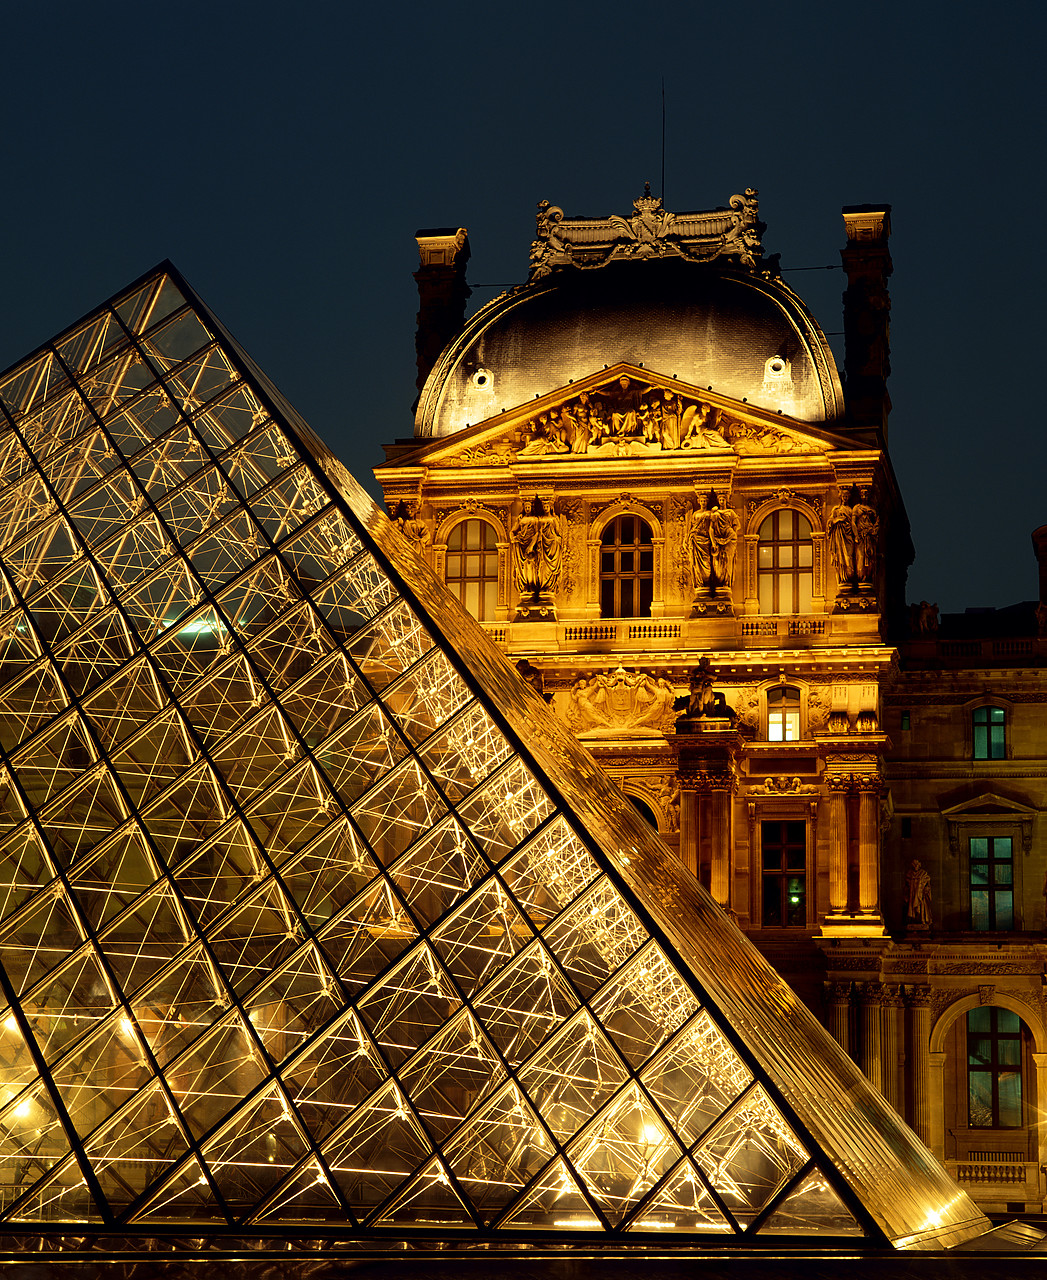 #010163-3 - The Louvre & Pyramid at Night, Paris, France